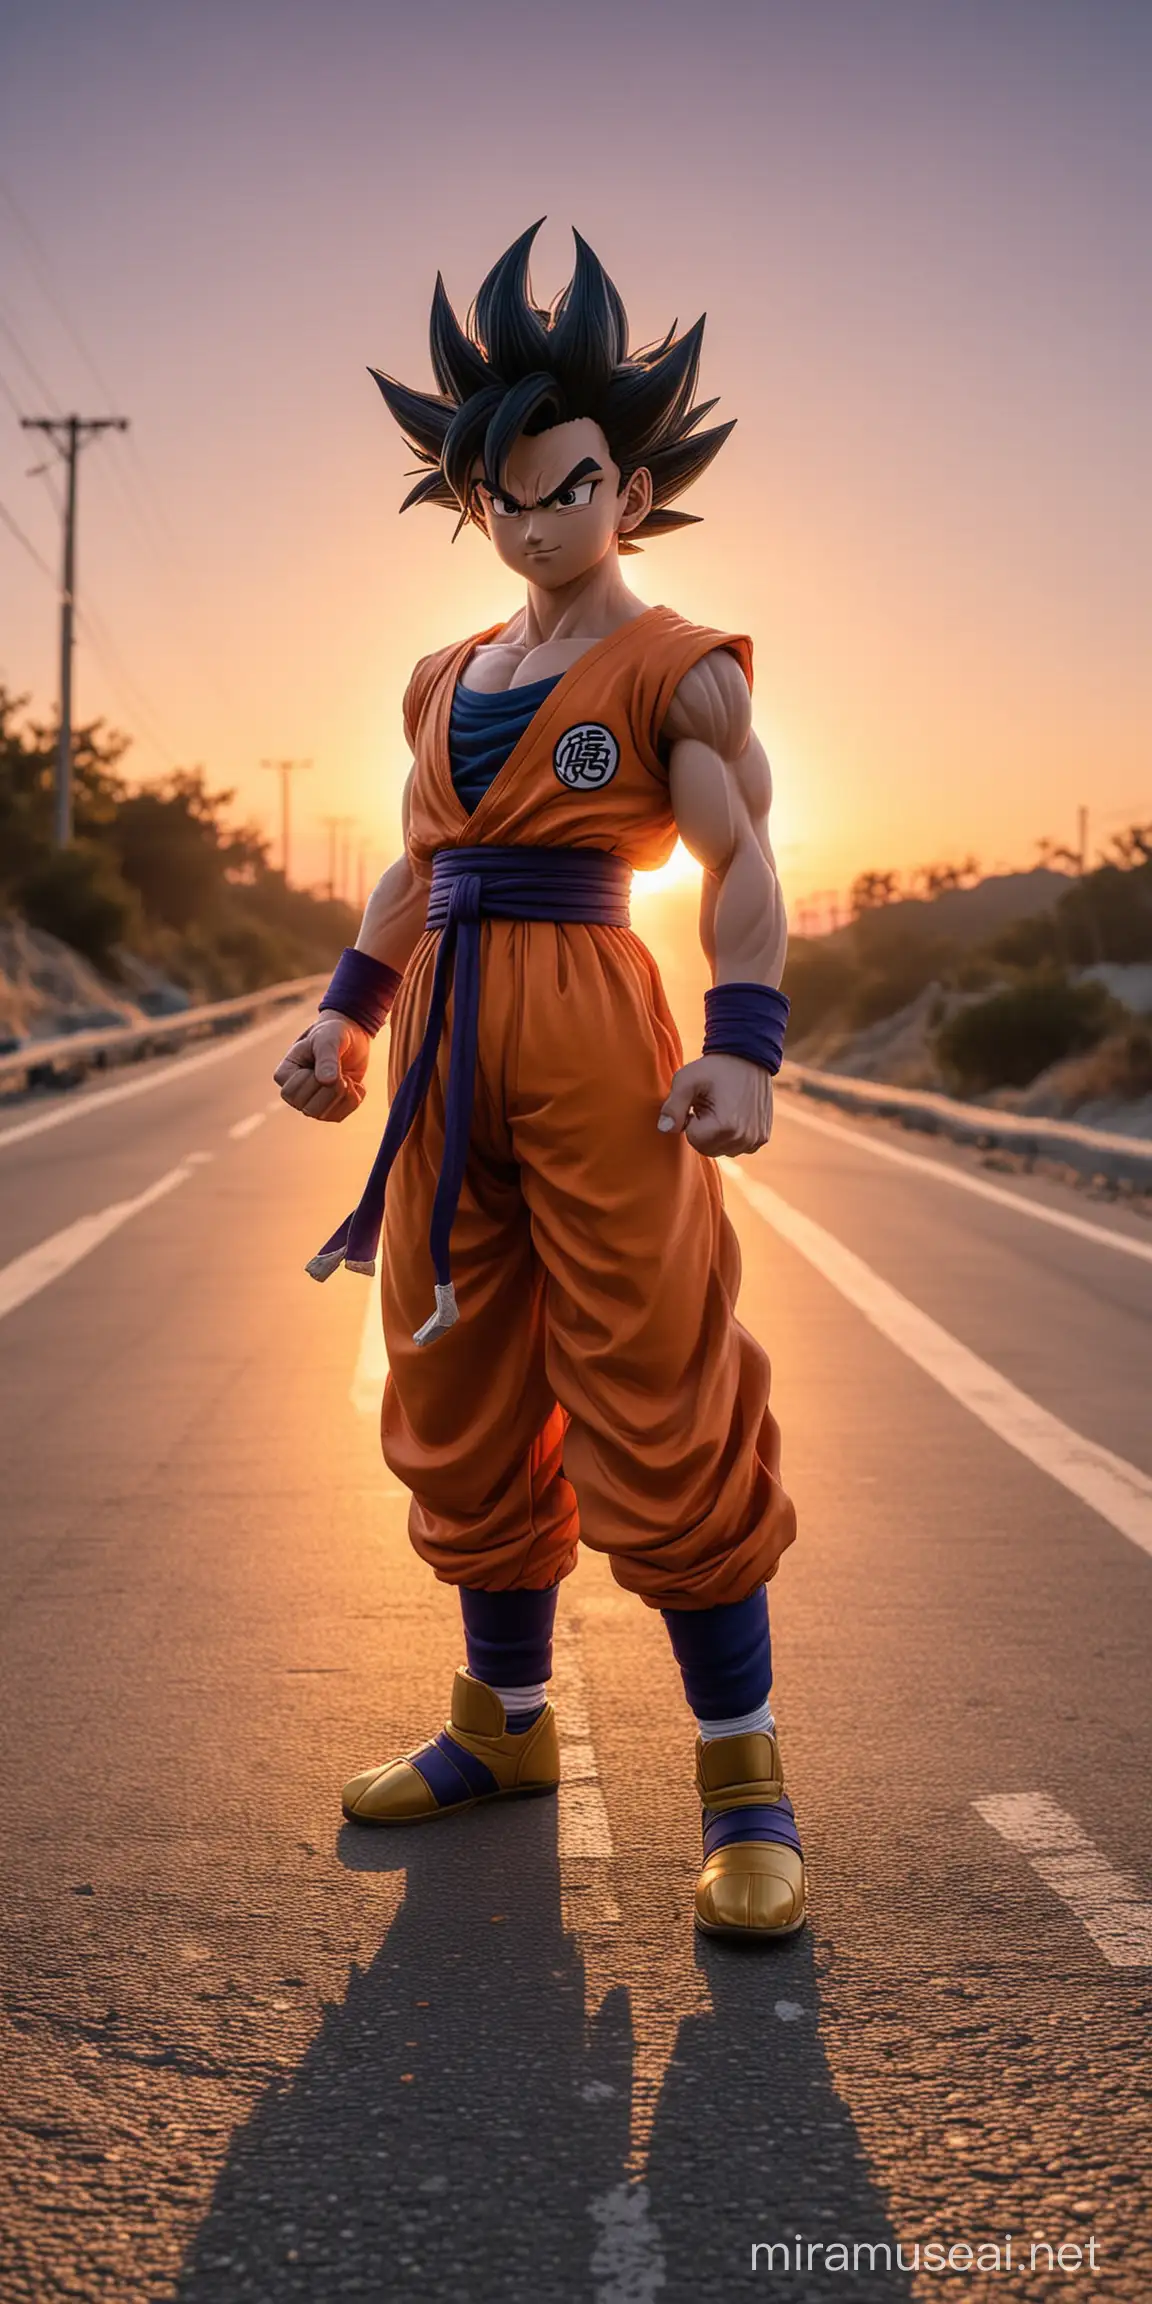 Gohan Dragon Ball Z Standing in Sunset